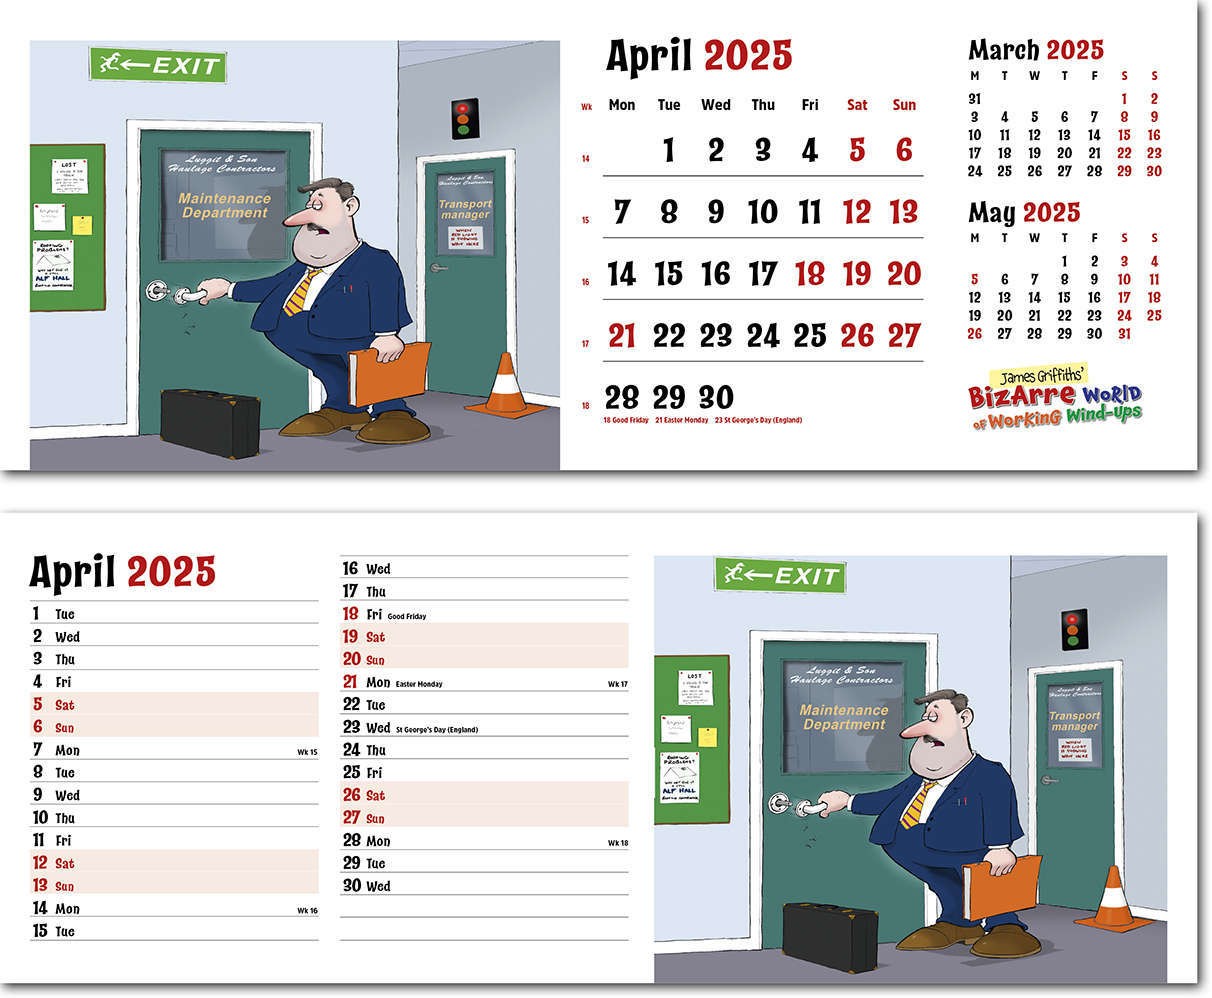 Bizarre World of Working Wind Ups Desk Calendar